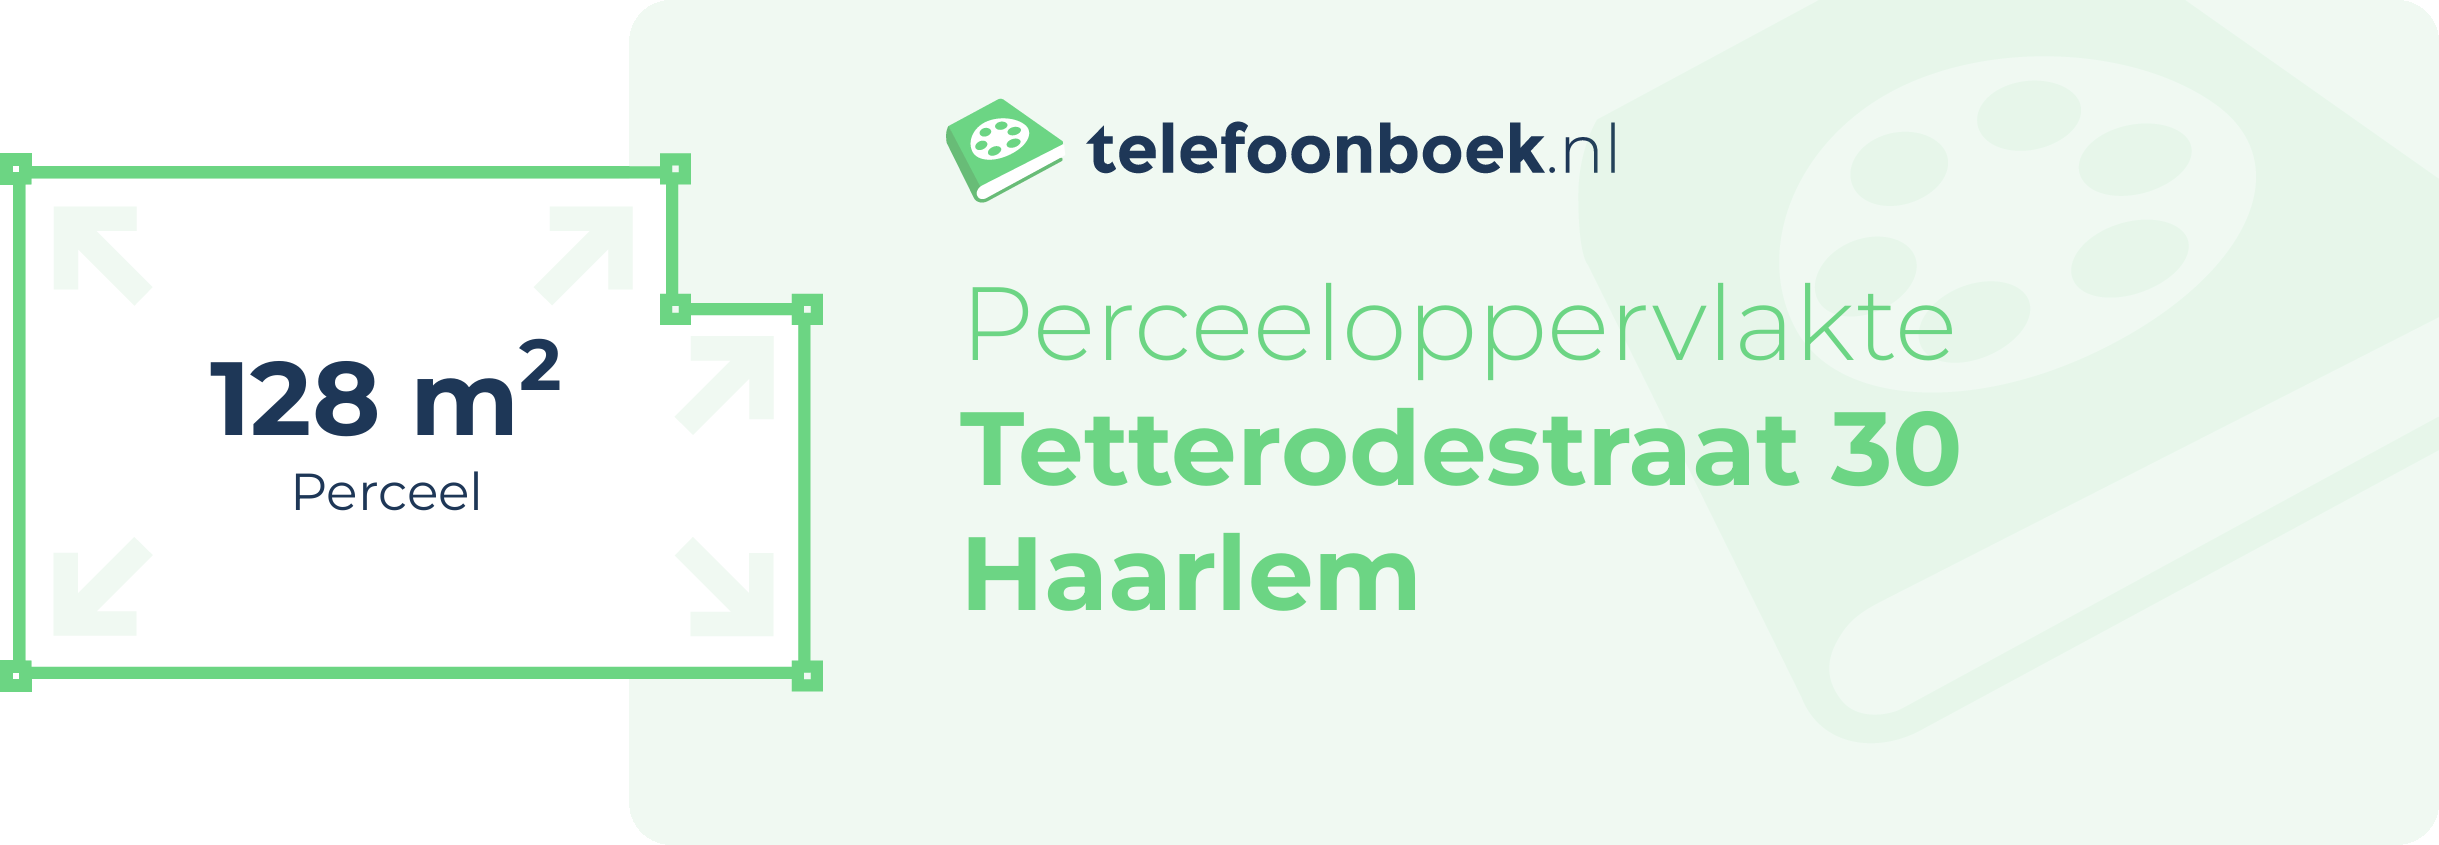 Perceeloppervlakte Tetterodestraat 30 Haarlem